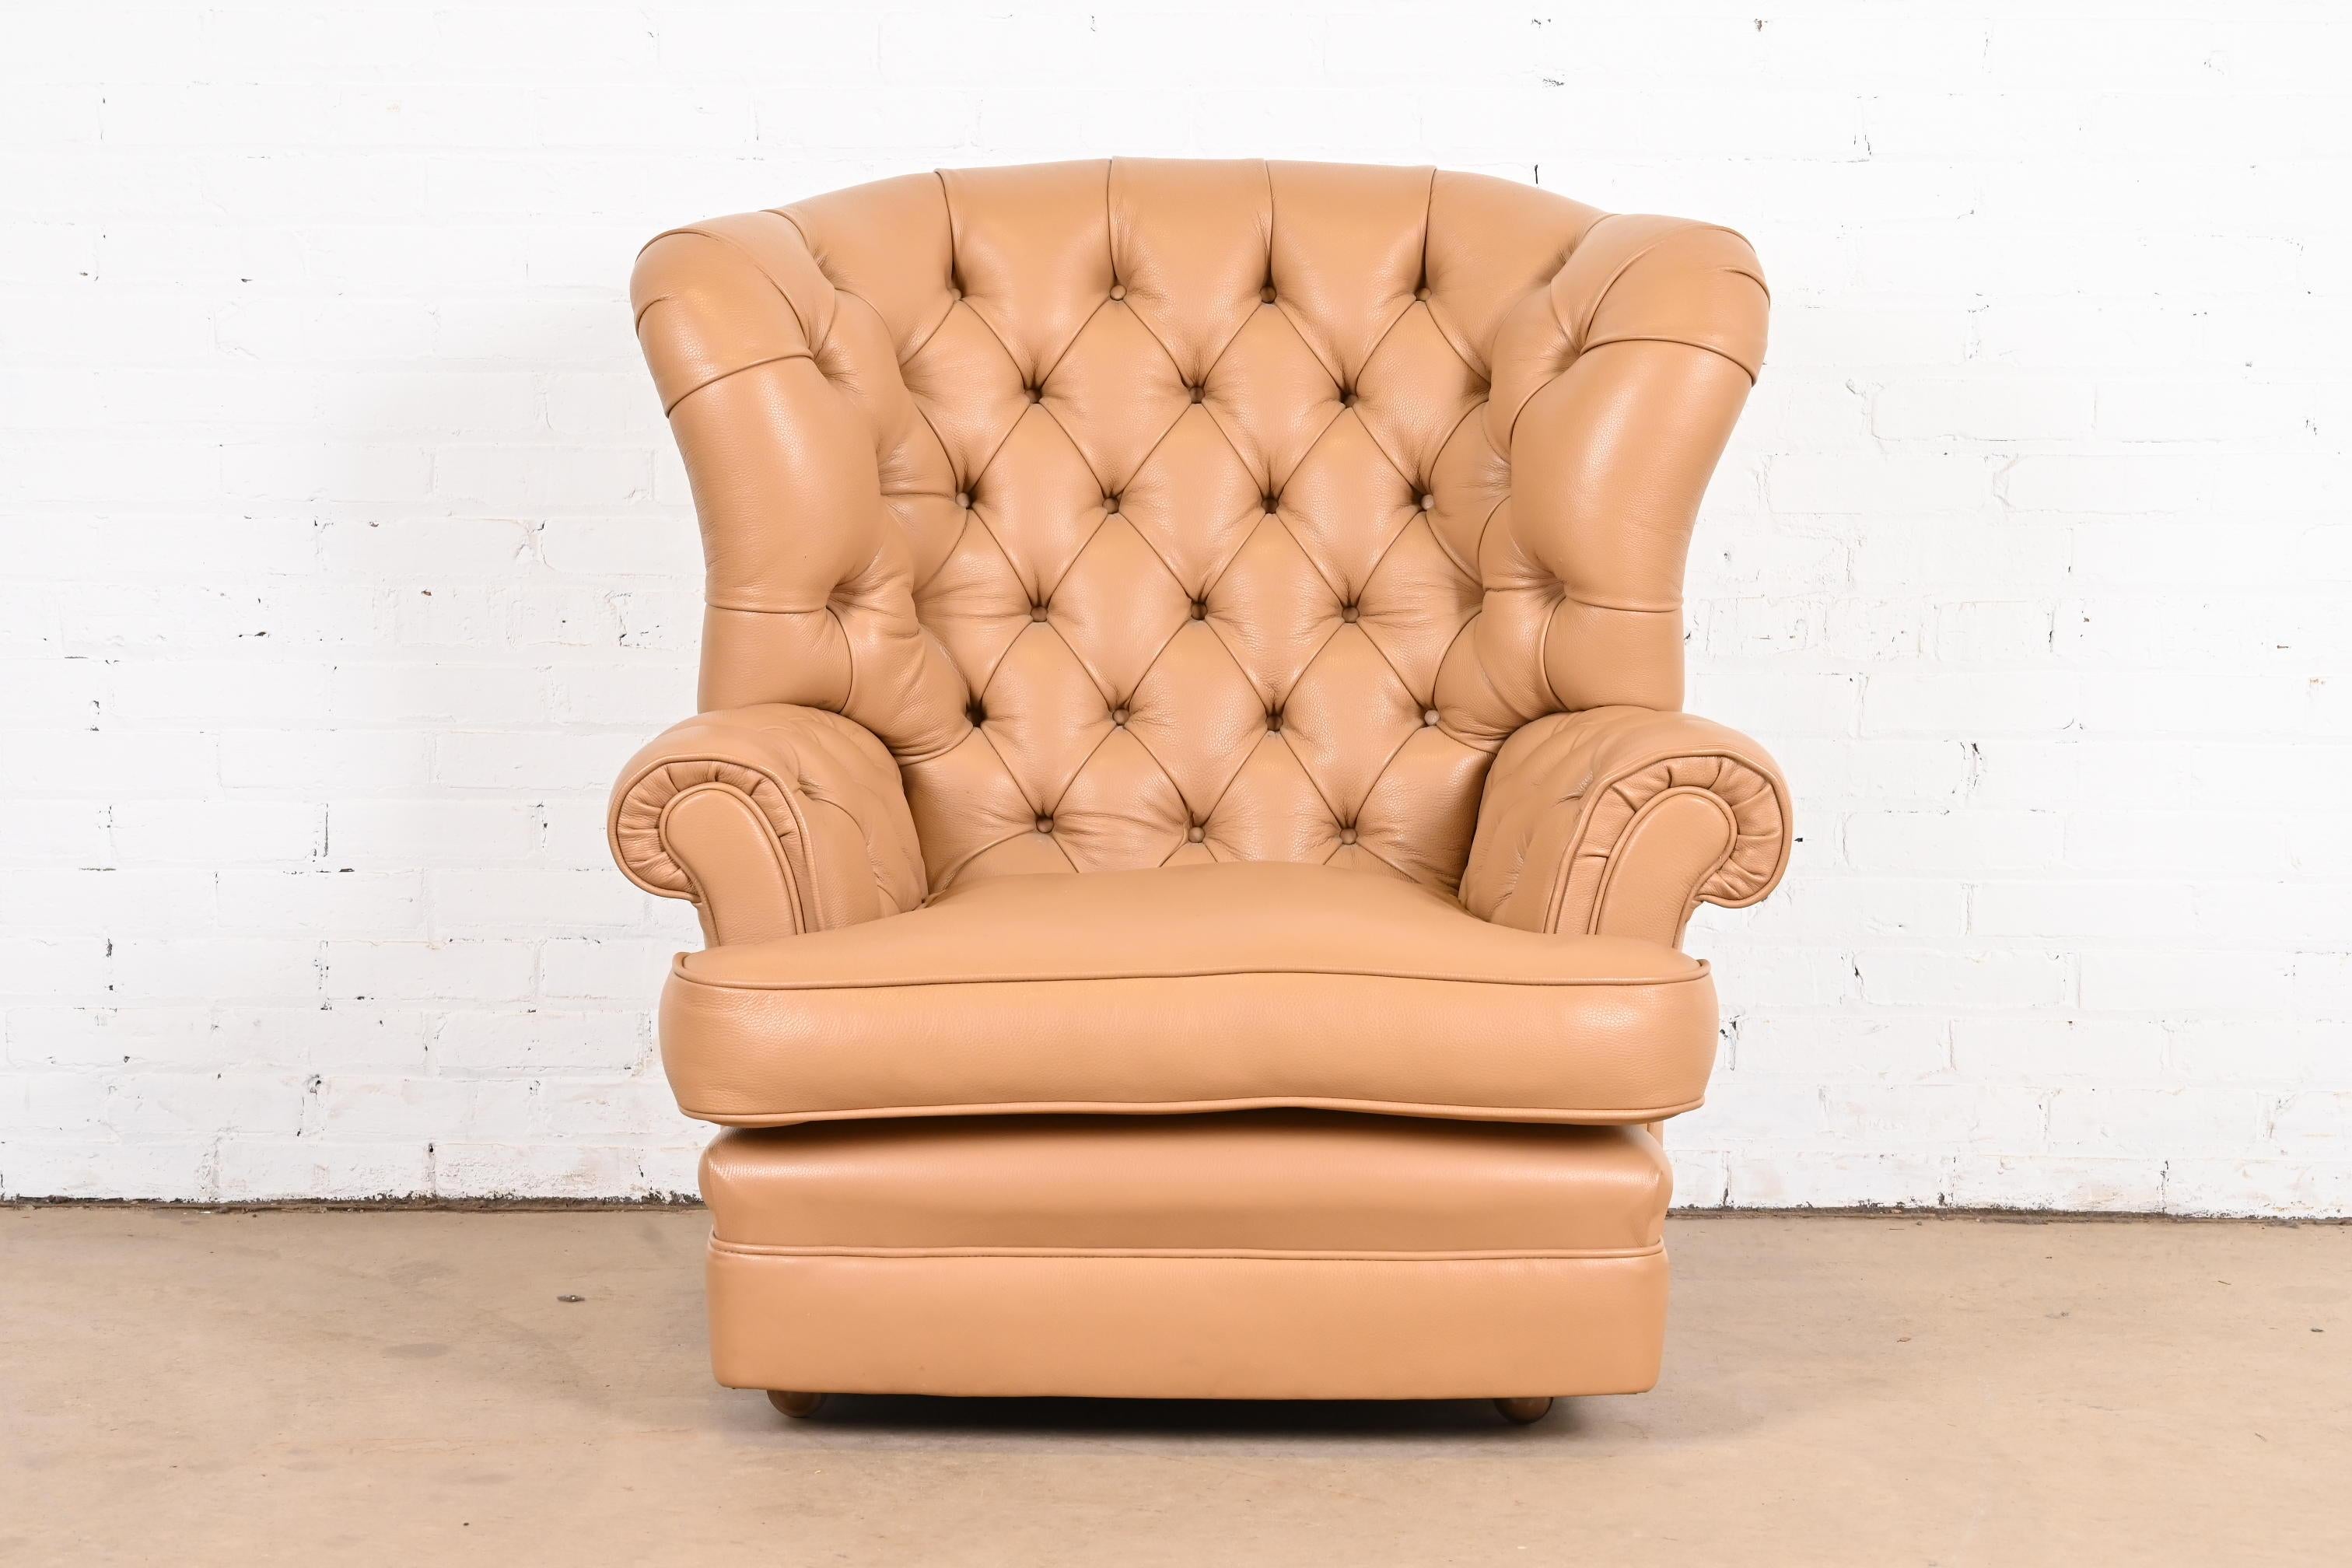 Ein prächtiger Chesterfield-Sessel, Clubsessel oder Loungesessel

USA, Ende des 20. Jahrhunderts

Getuftetes Leder, auf Rollen.

Maße: 38 